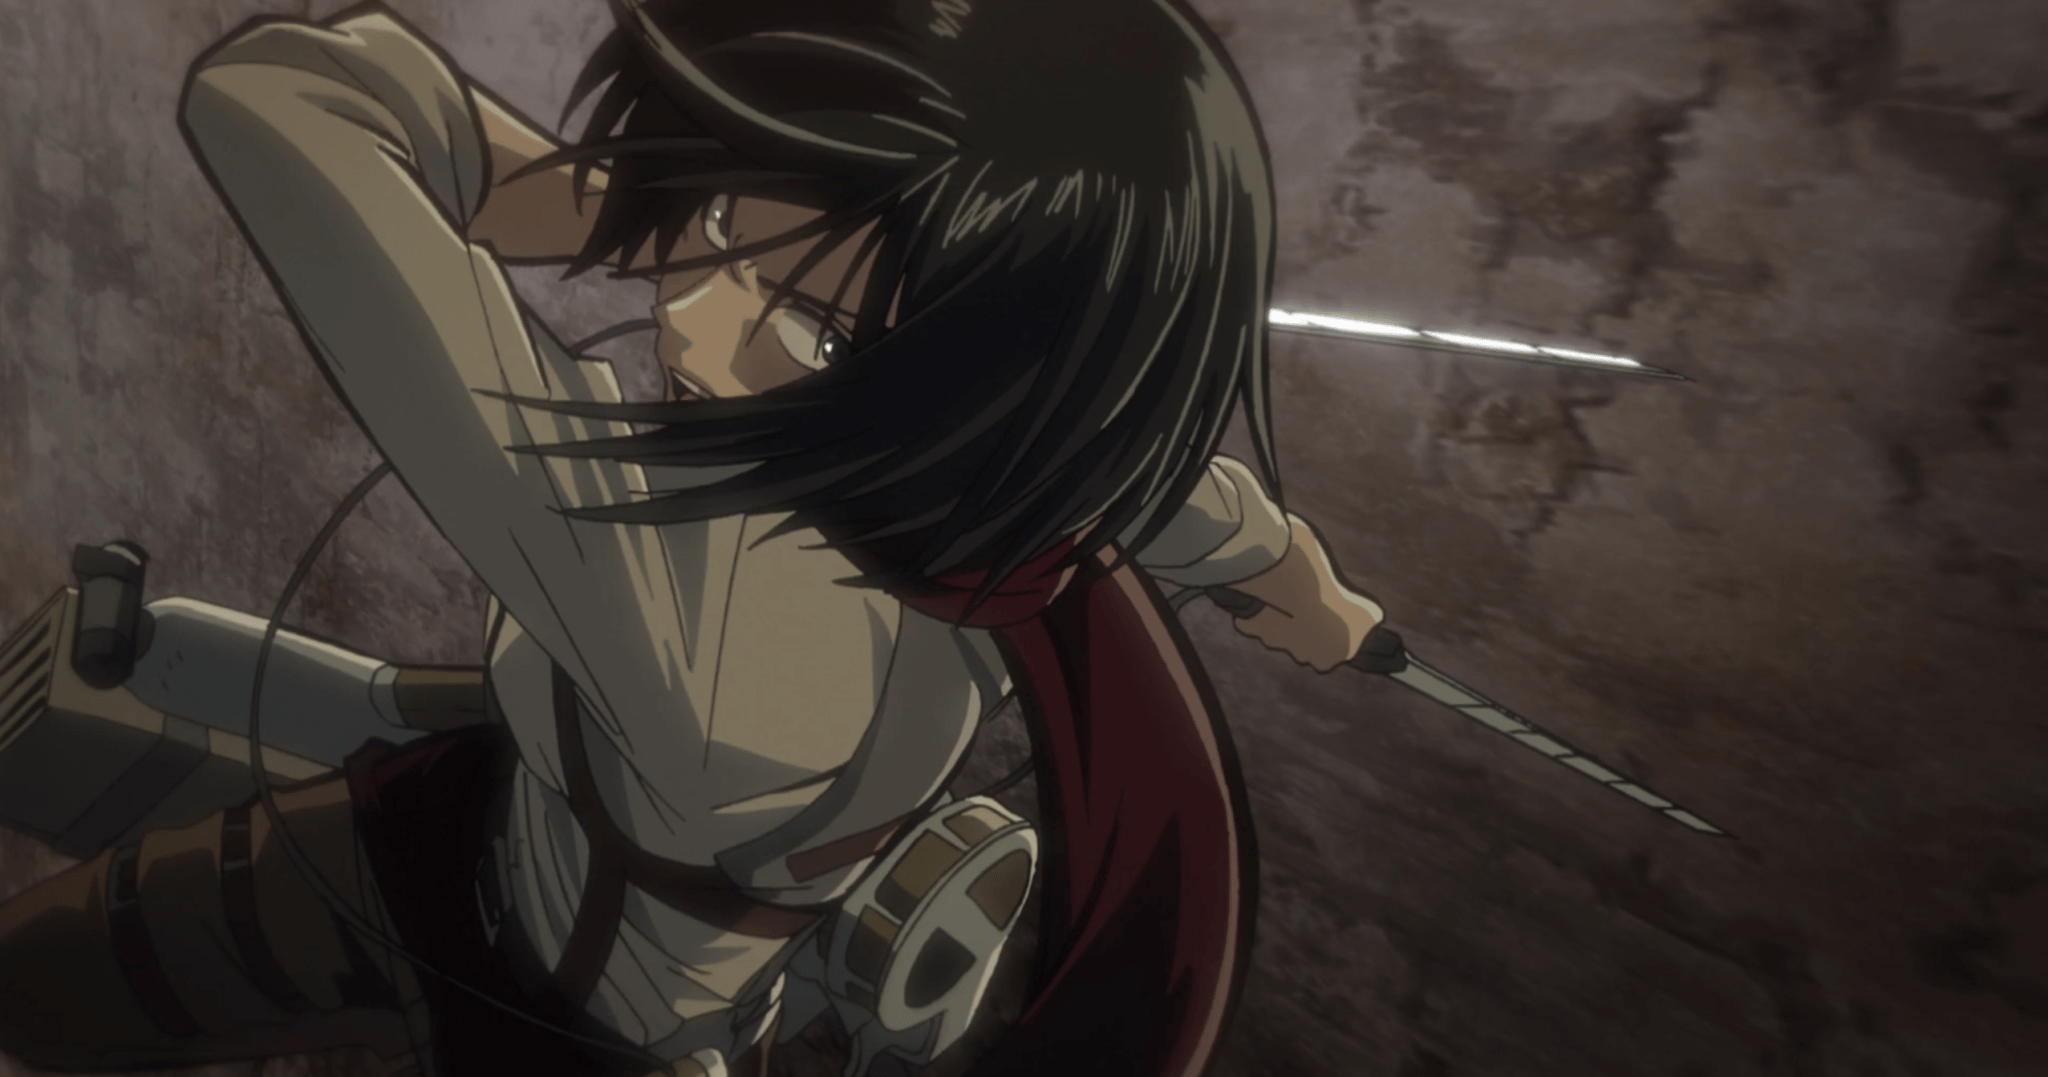 Mikasa fighting in Attack on Titan.